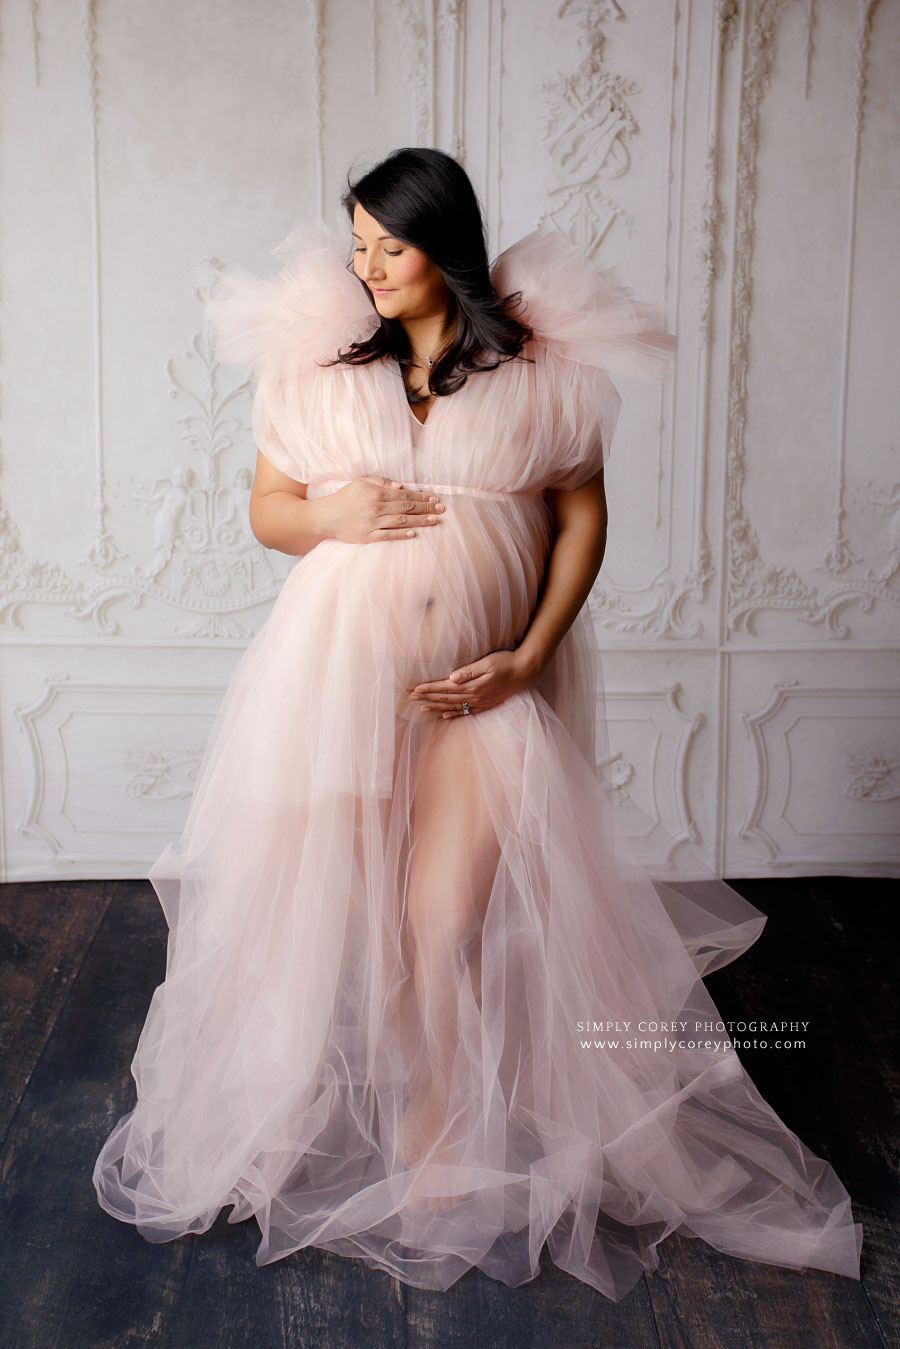 Atlanta maternity photographer, studio pregnancy portrait in pink tulle dress